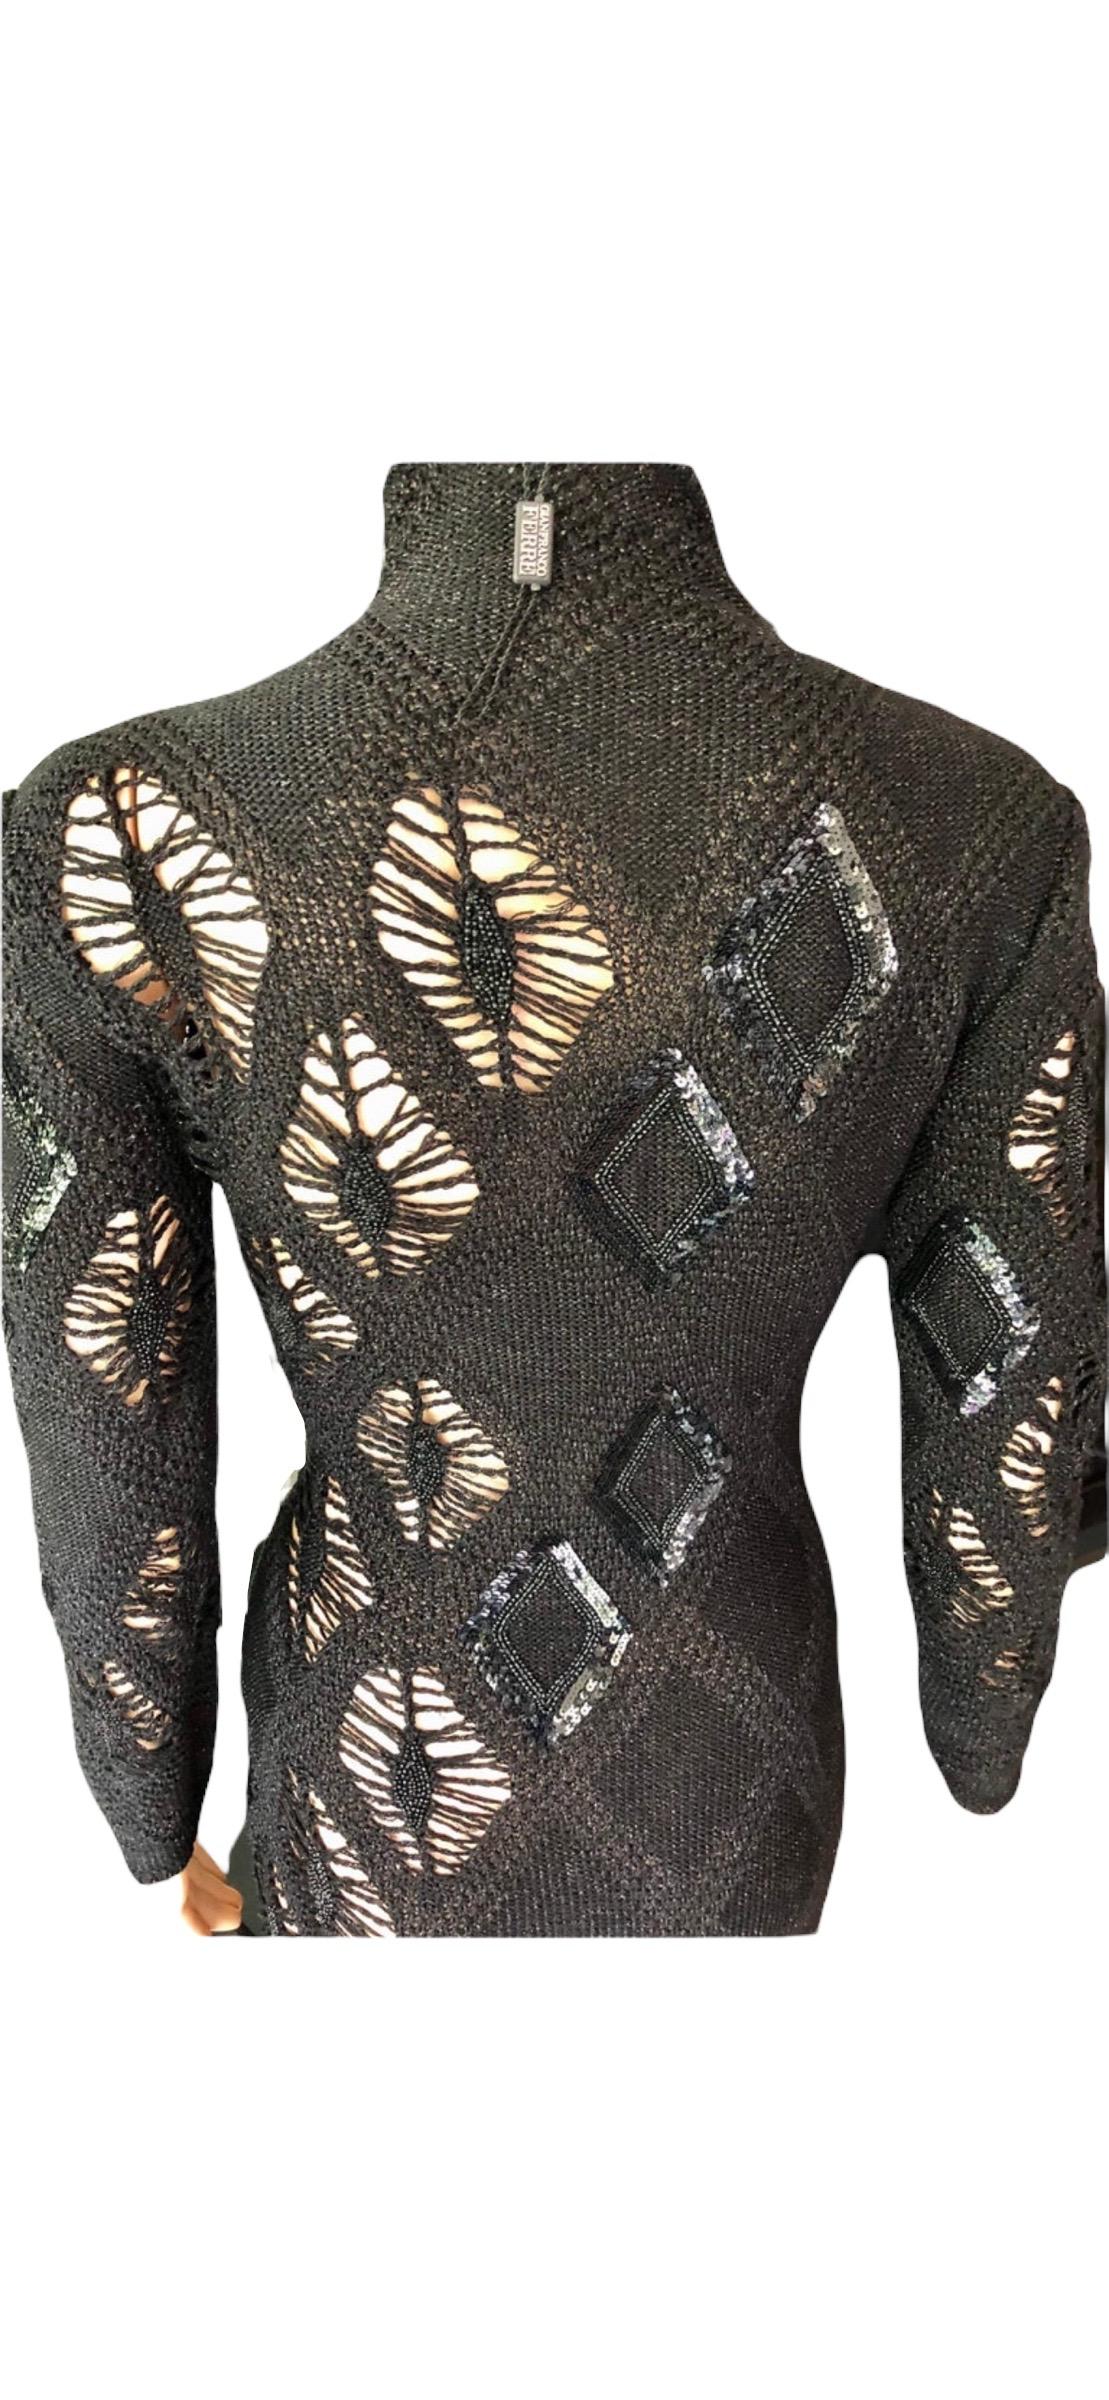 Gianfranco Ferre S/S 2002 Beaded Sequin Sheer Crochet Knit Black Maxi Dress Gown For Sale 11